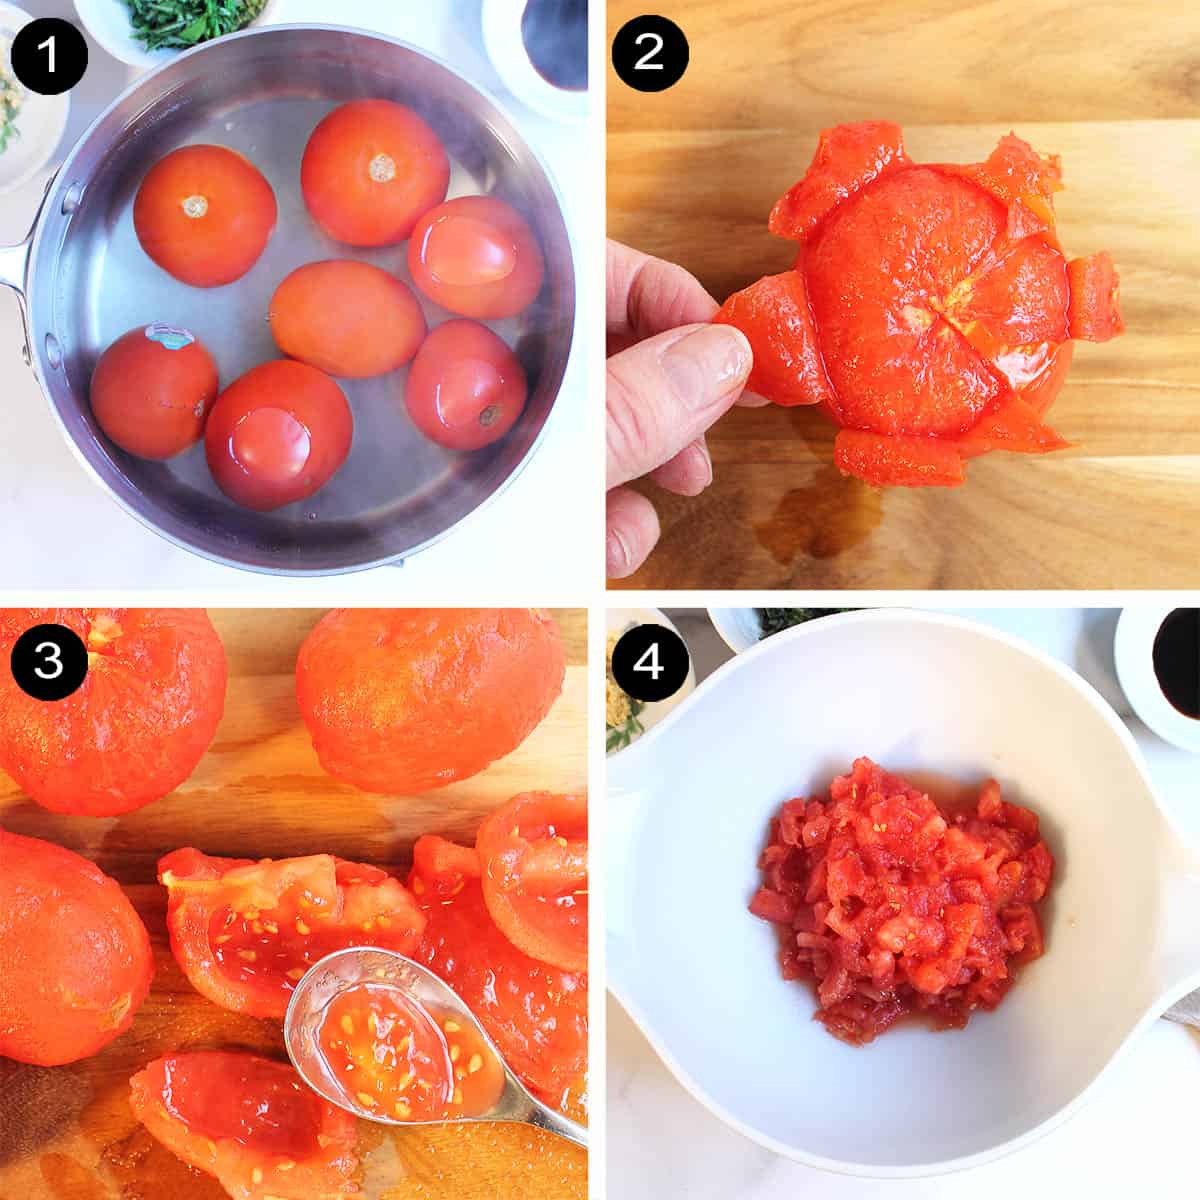 How to prepare tomatoes for bruschetta 